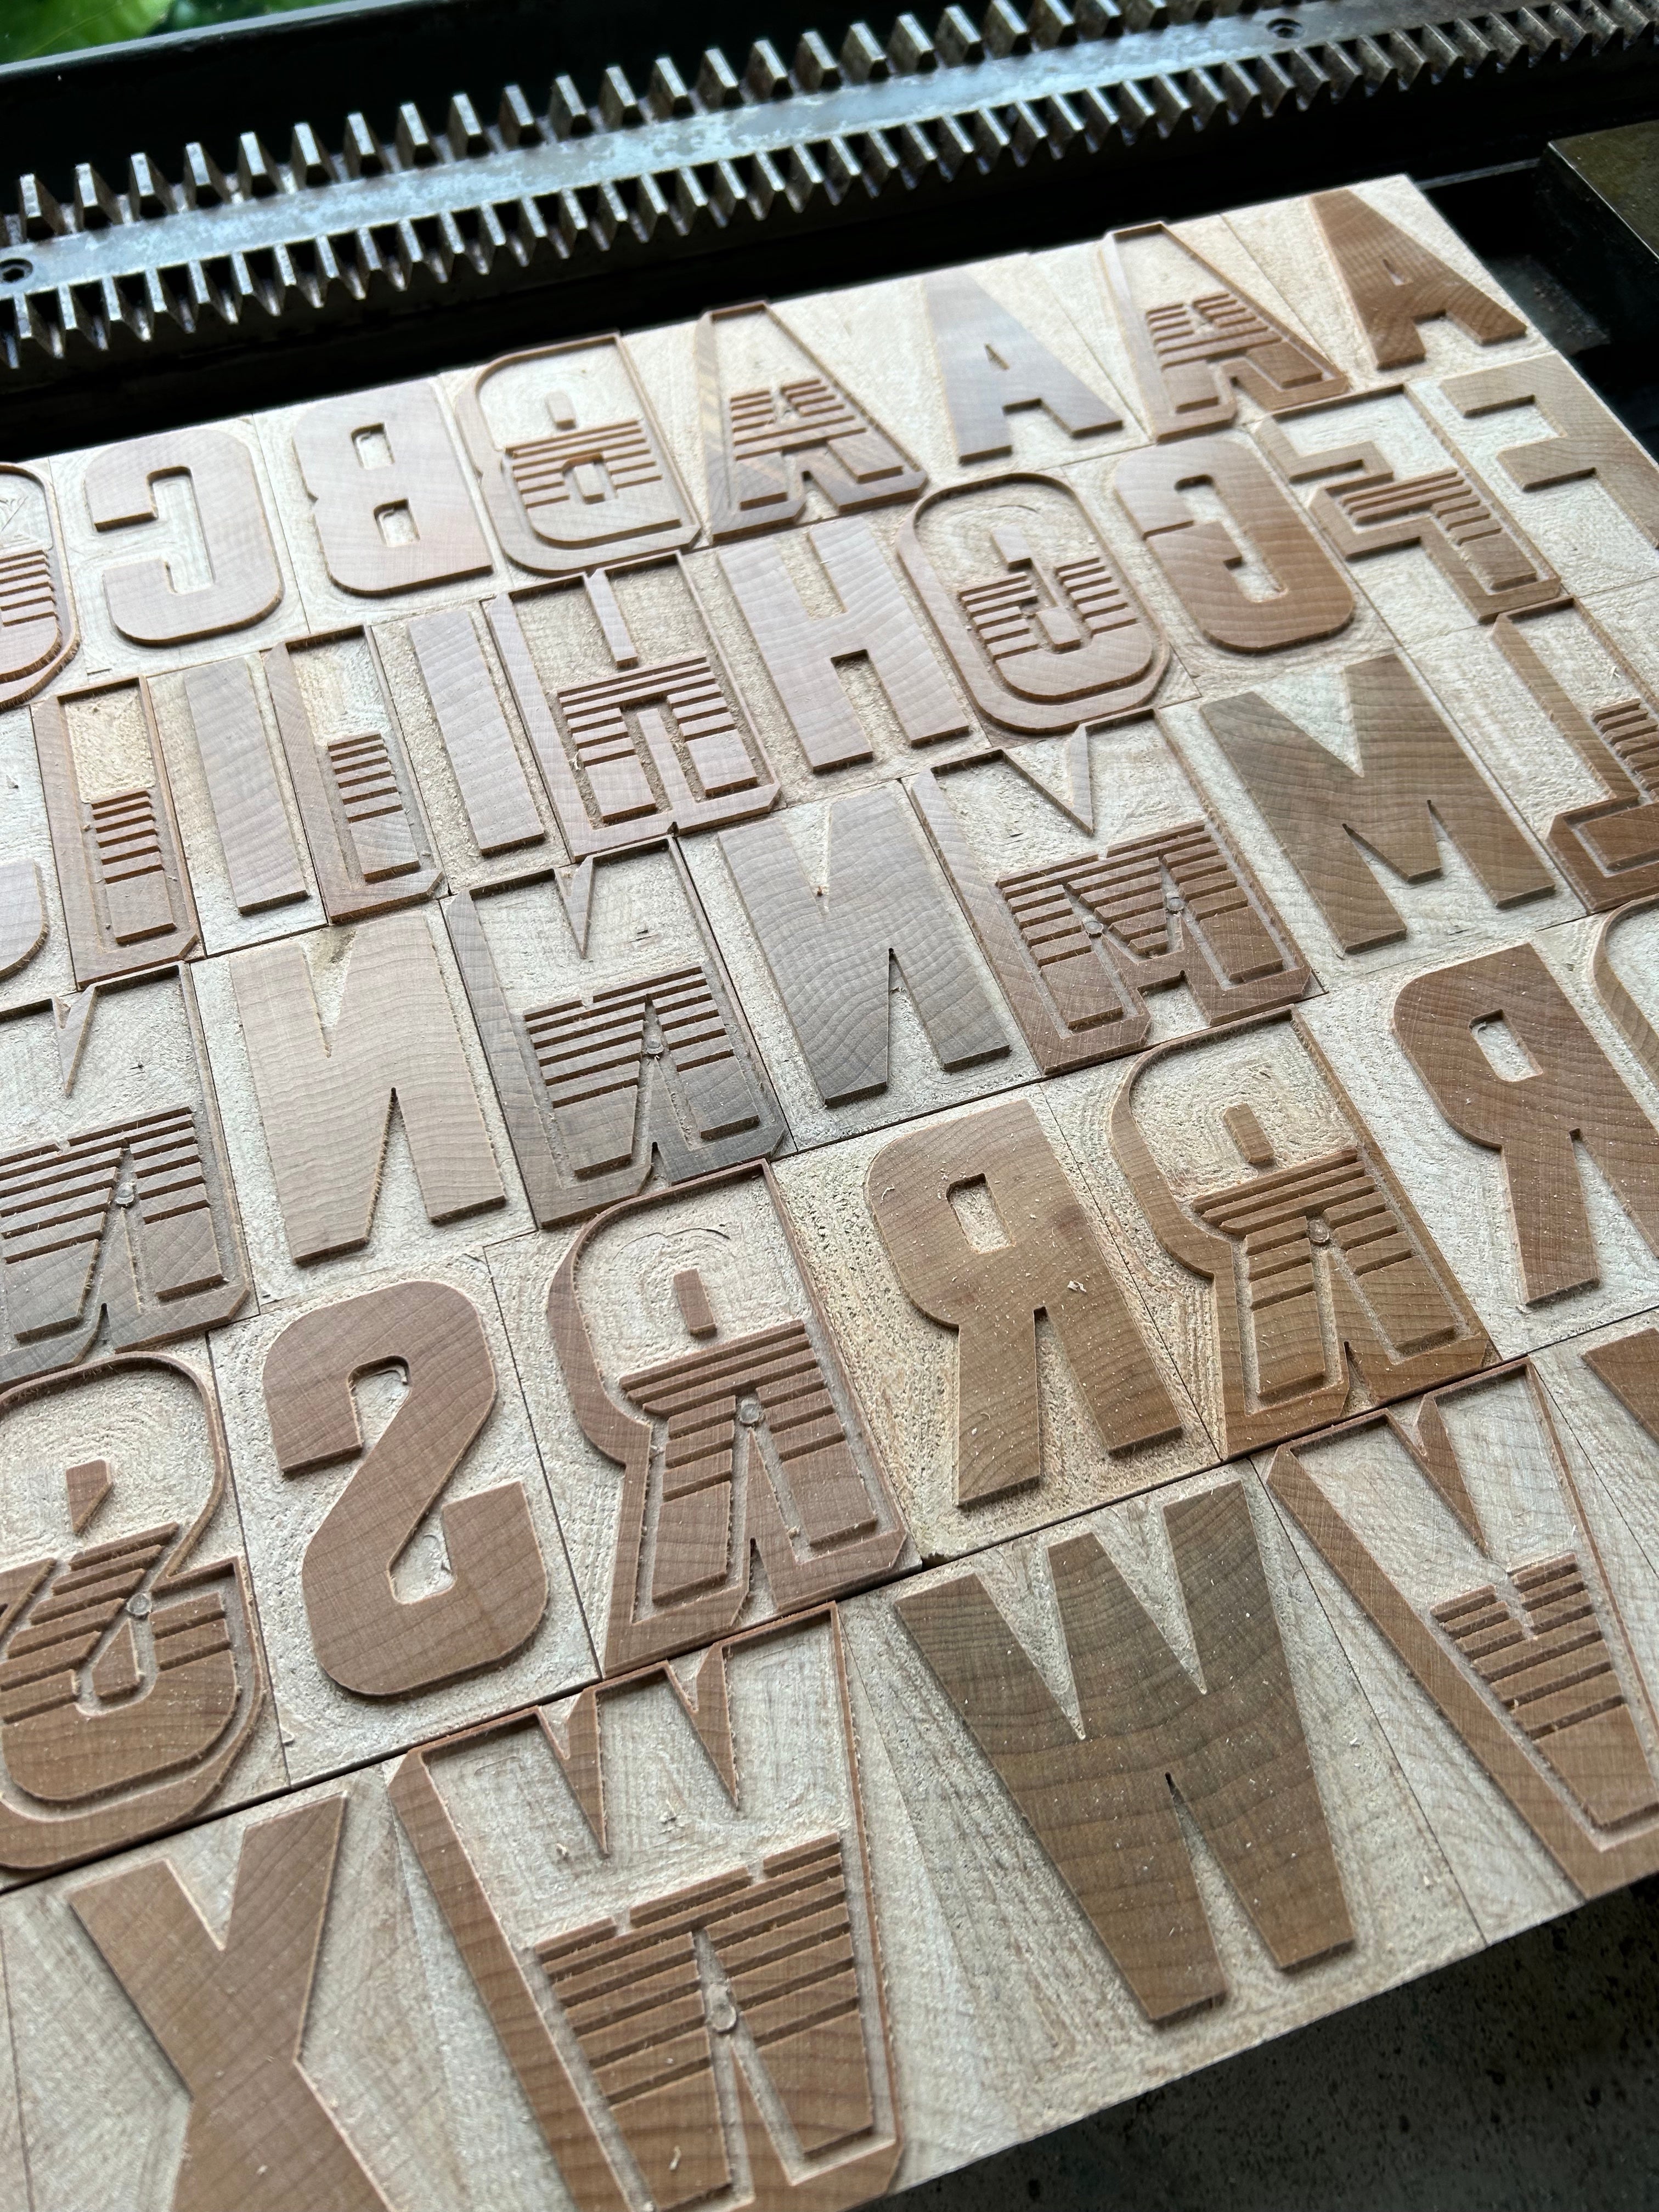 'Stewartby Chromatic' letterpress woodtype typeface